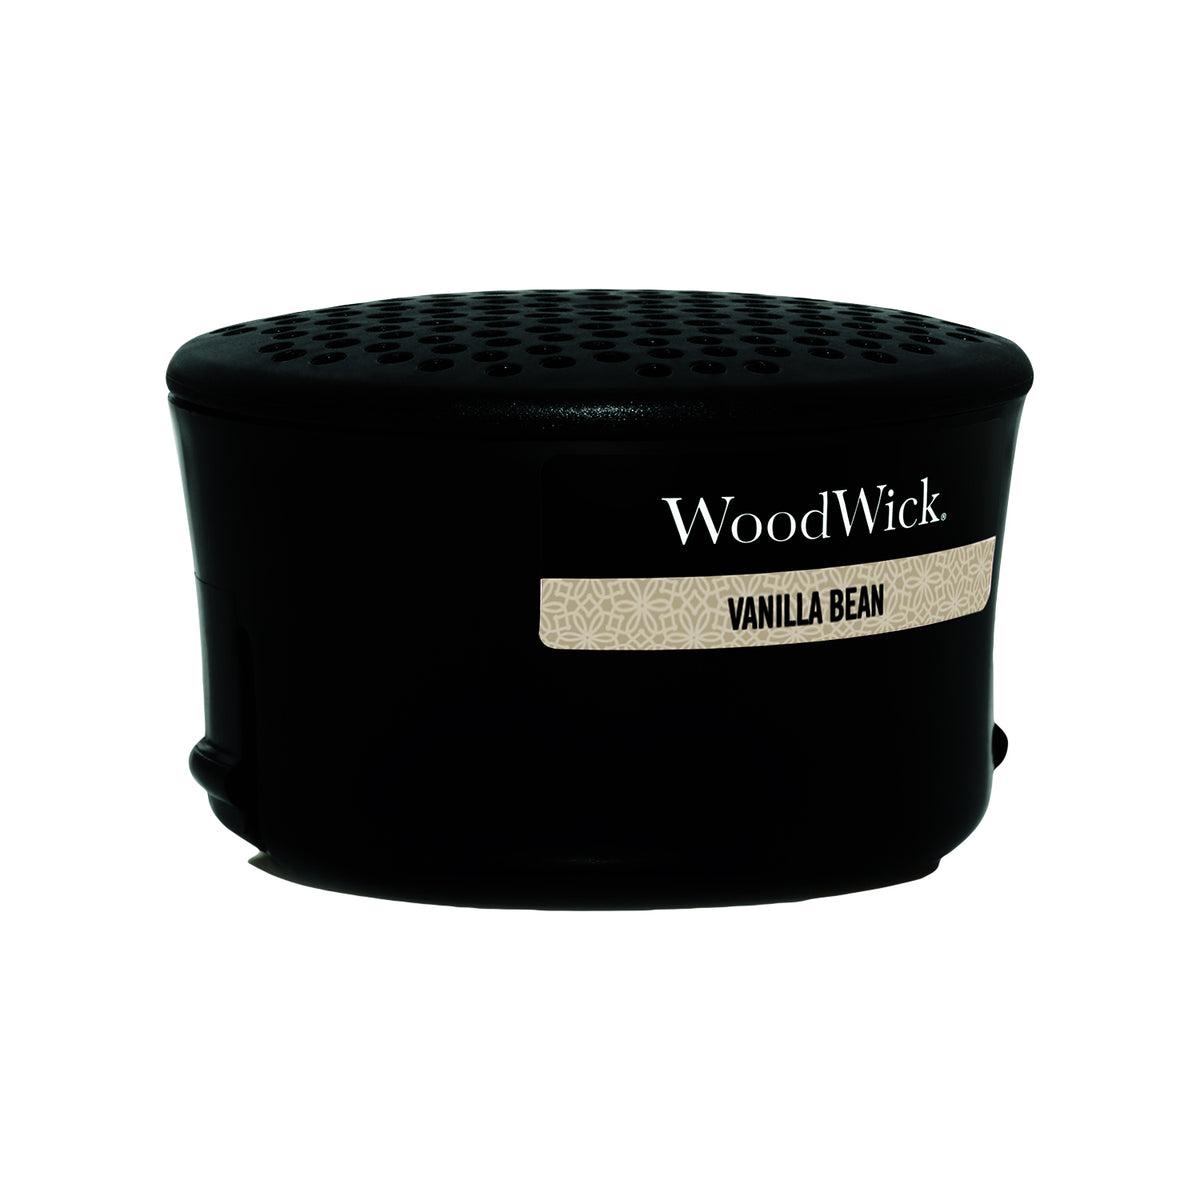 Woodwick Radiance Diffuser Refill - Vanilla Bean